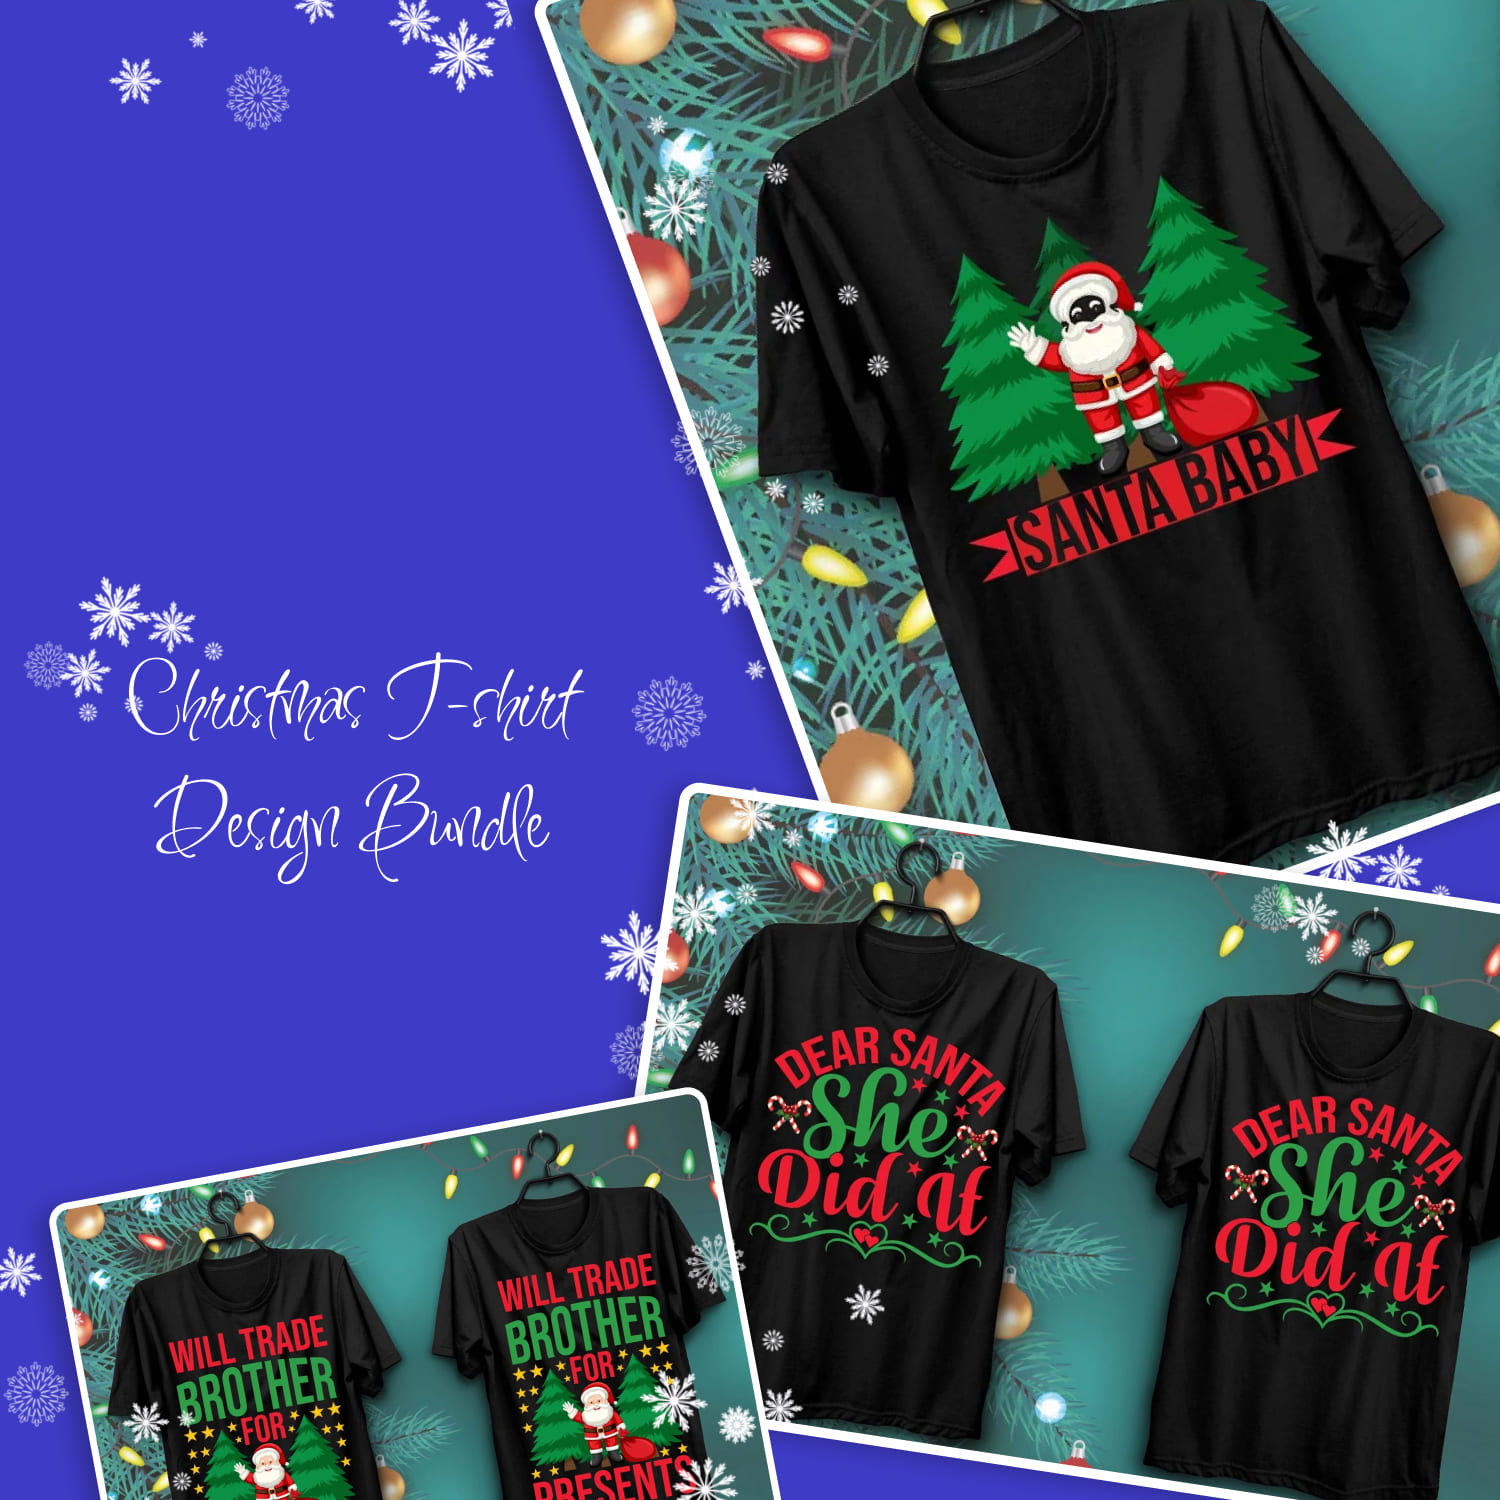 Black T-shirts with colorful Christmas prints.